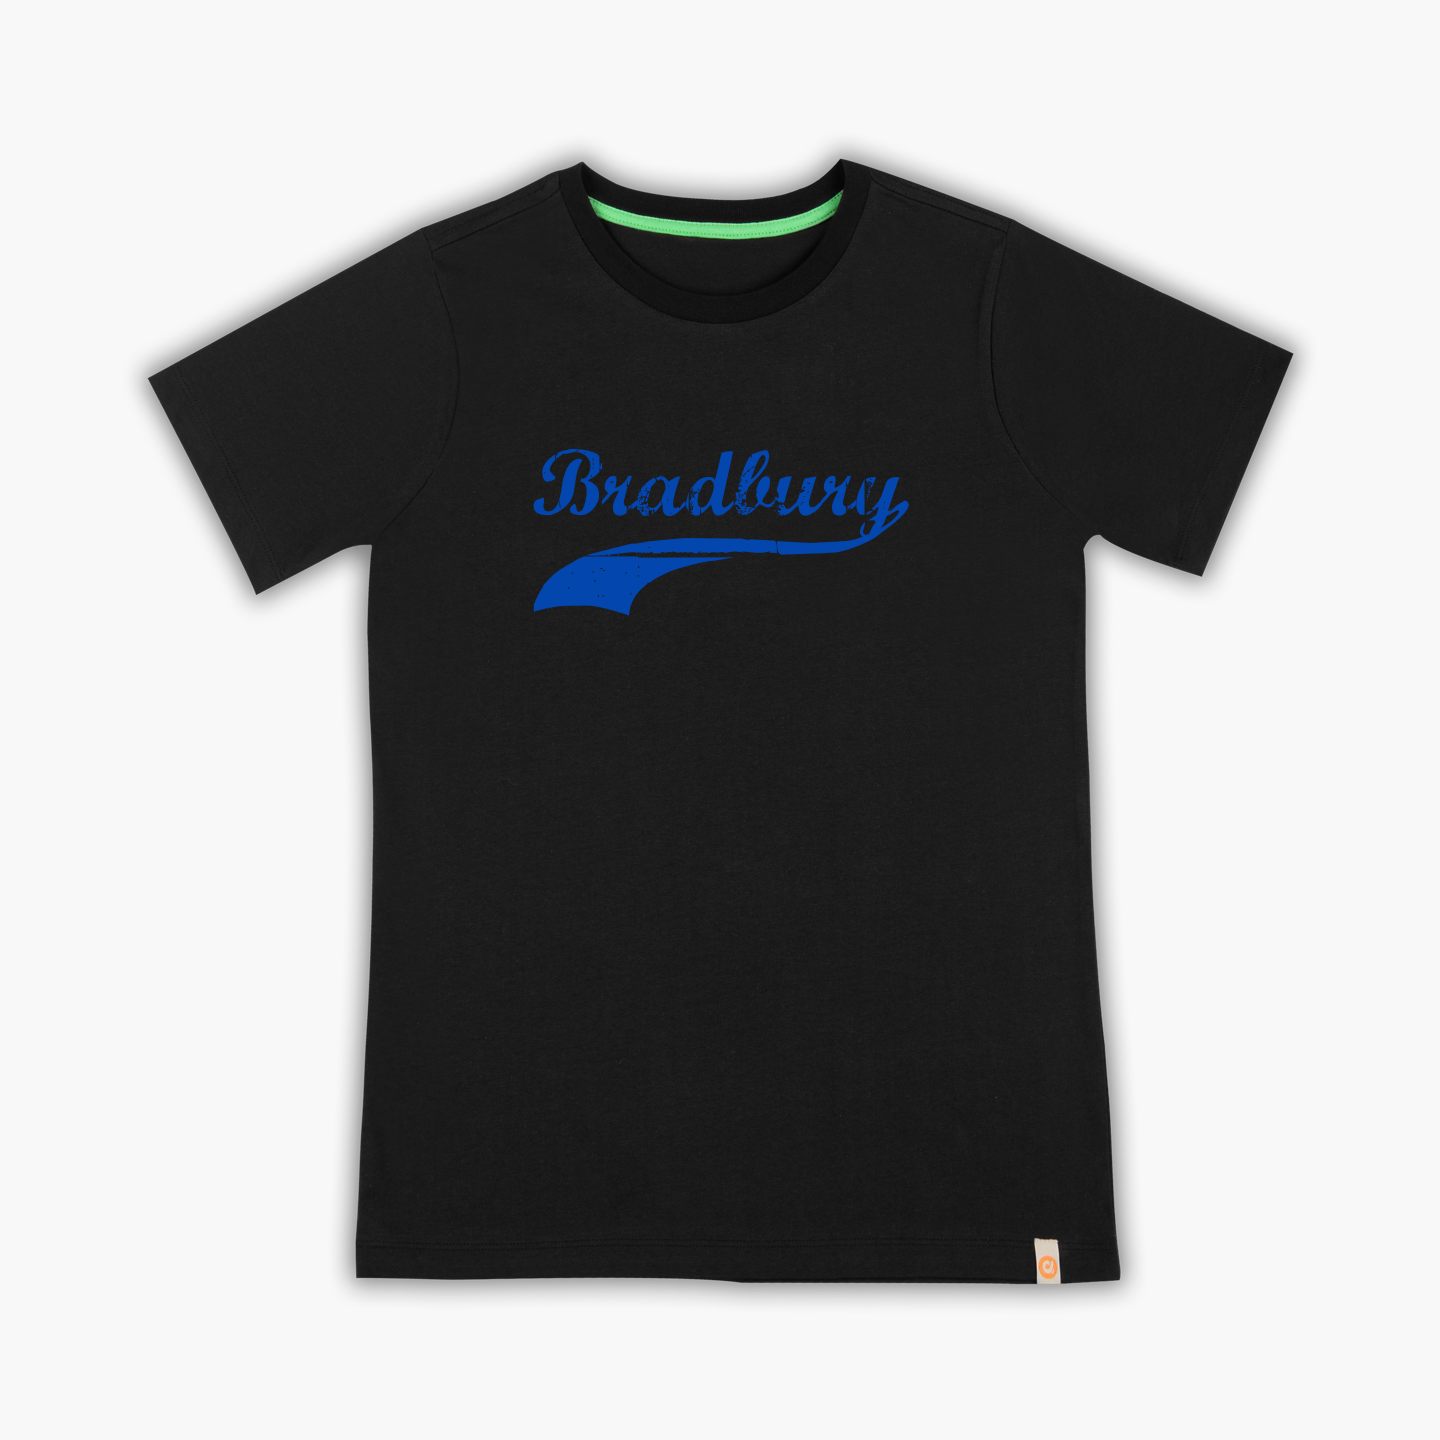 Ray Bradbury Lisesi - Tişört